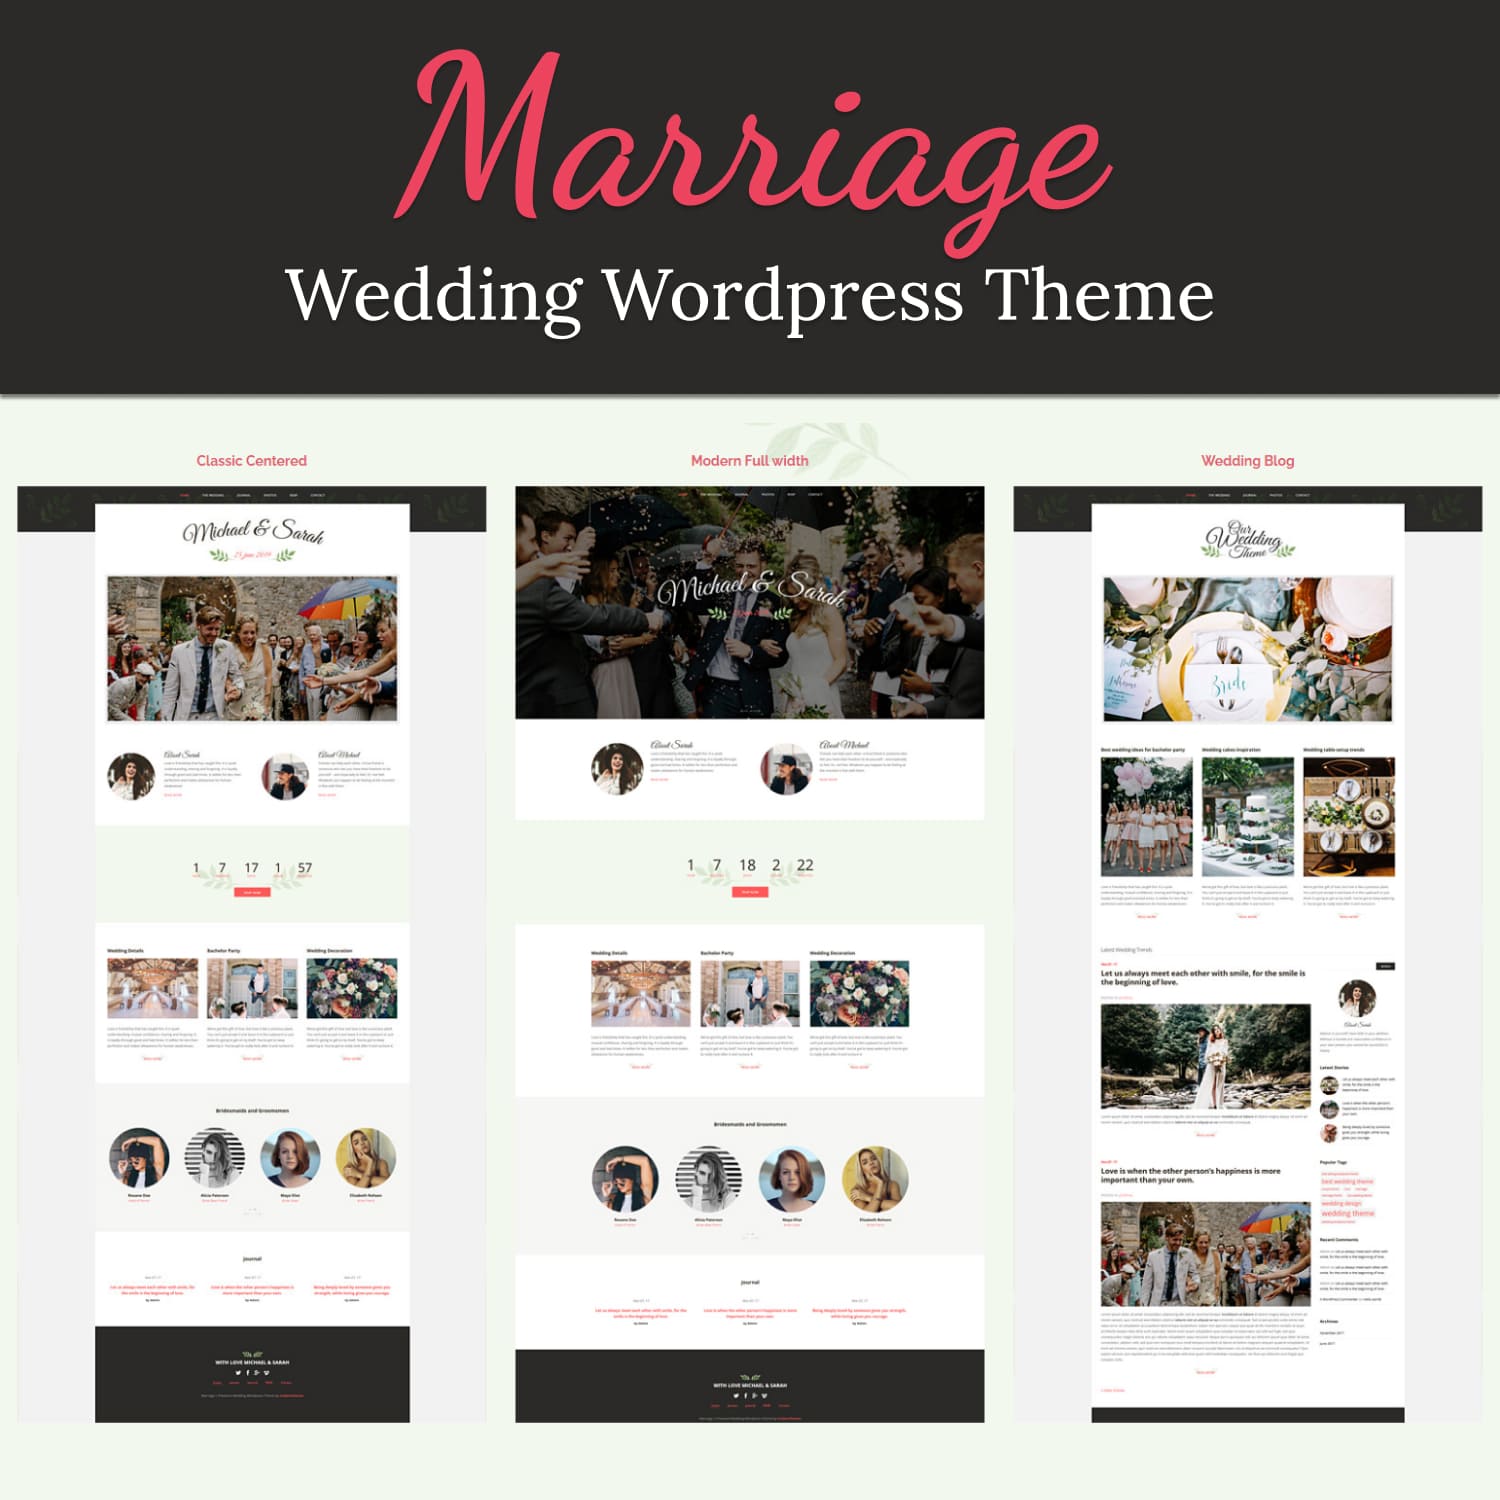 Marriage responsive wedding wordpress theme, main picture 1500x1500.